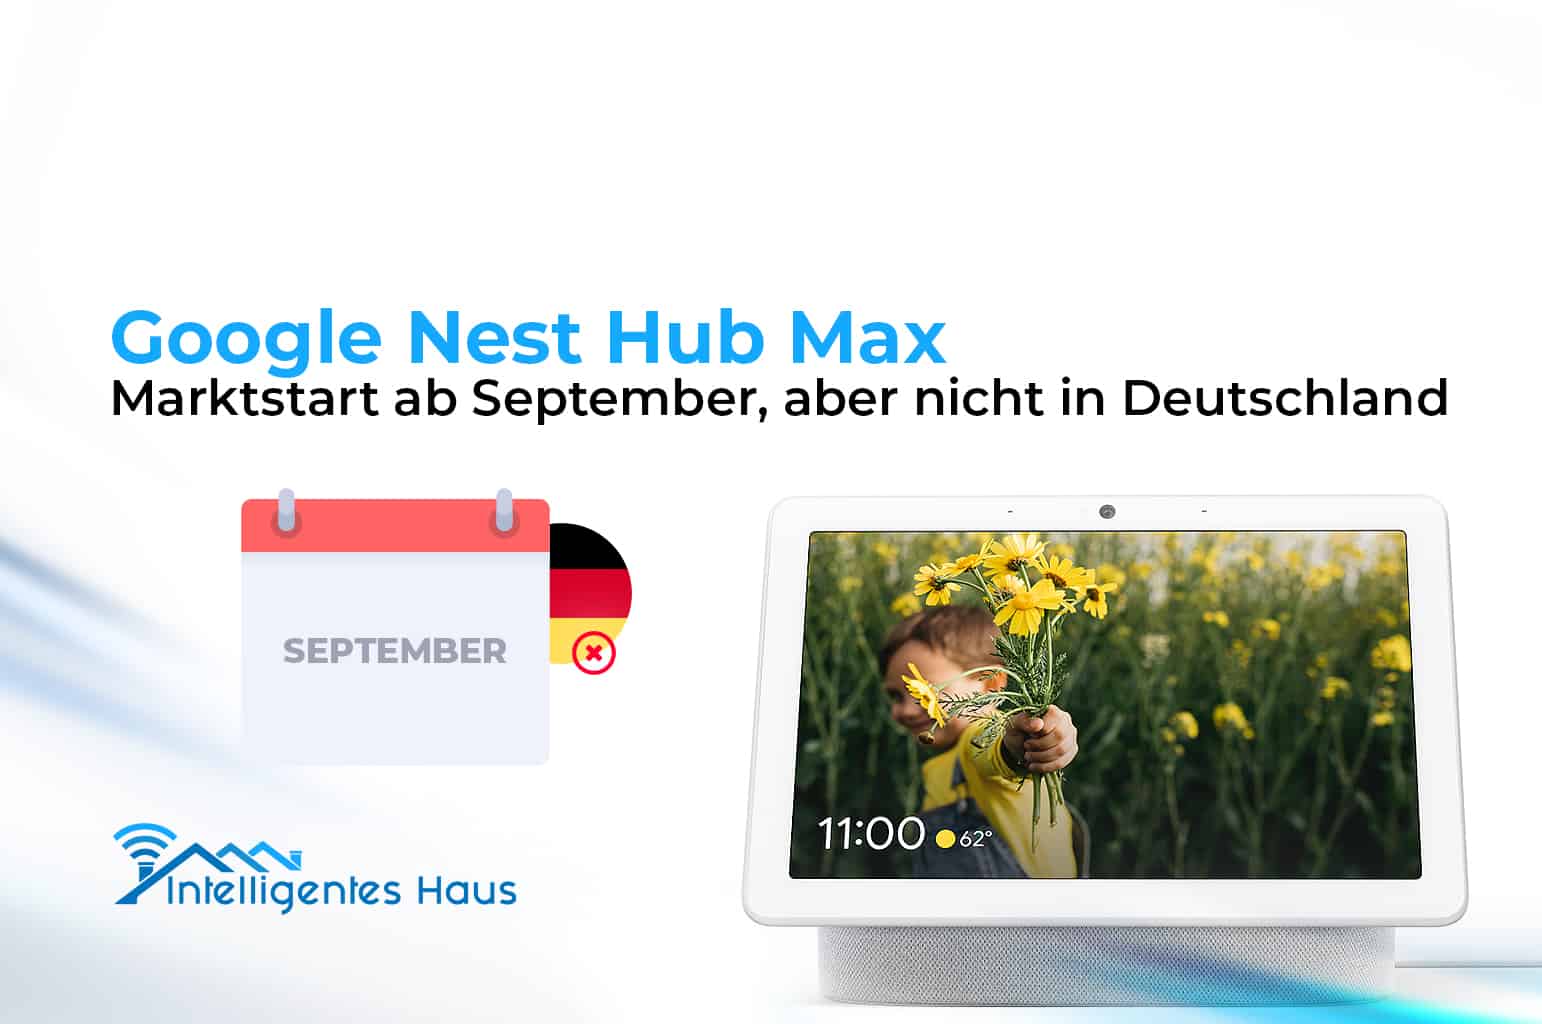 Google Nest Hub Max Releasedatum